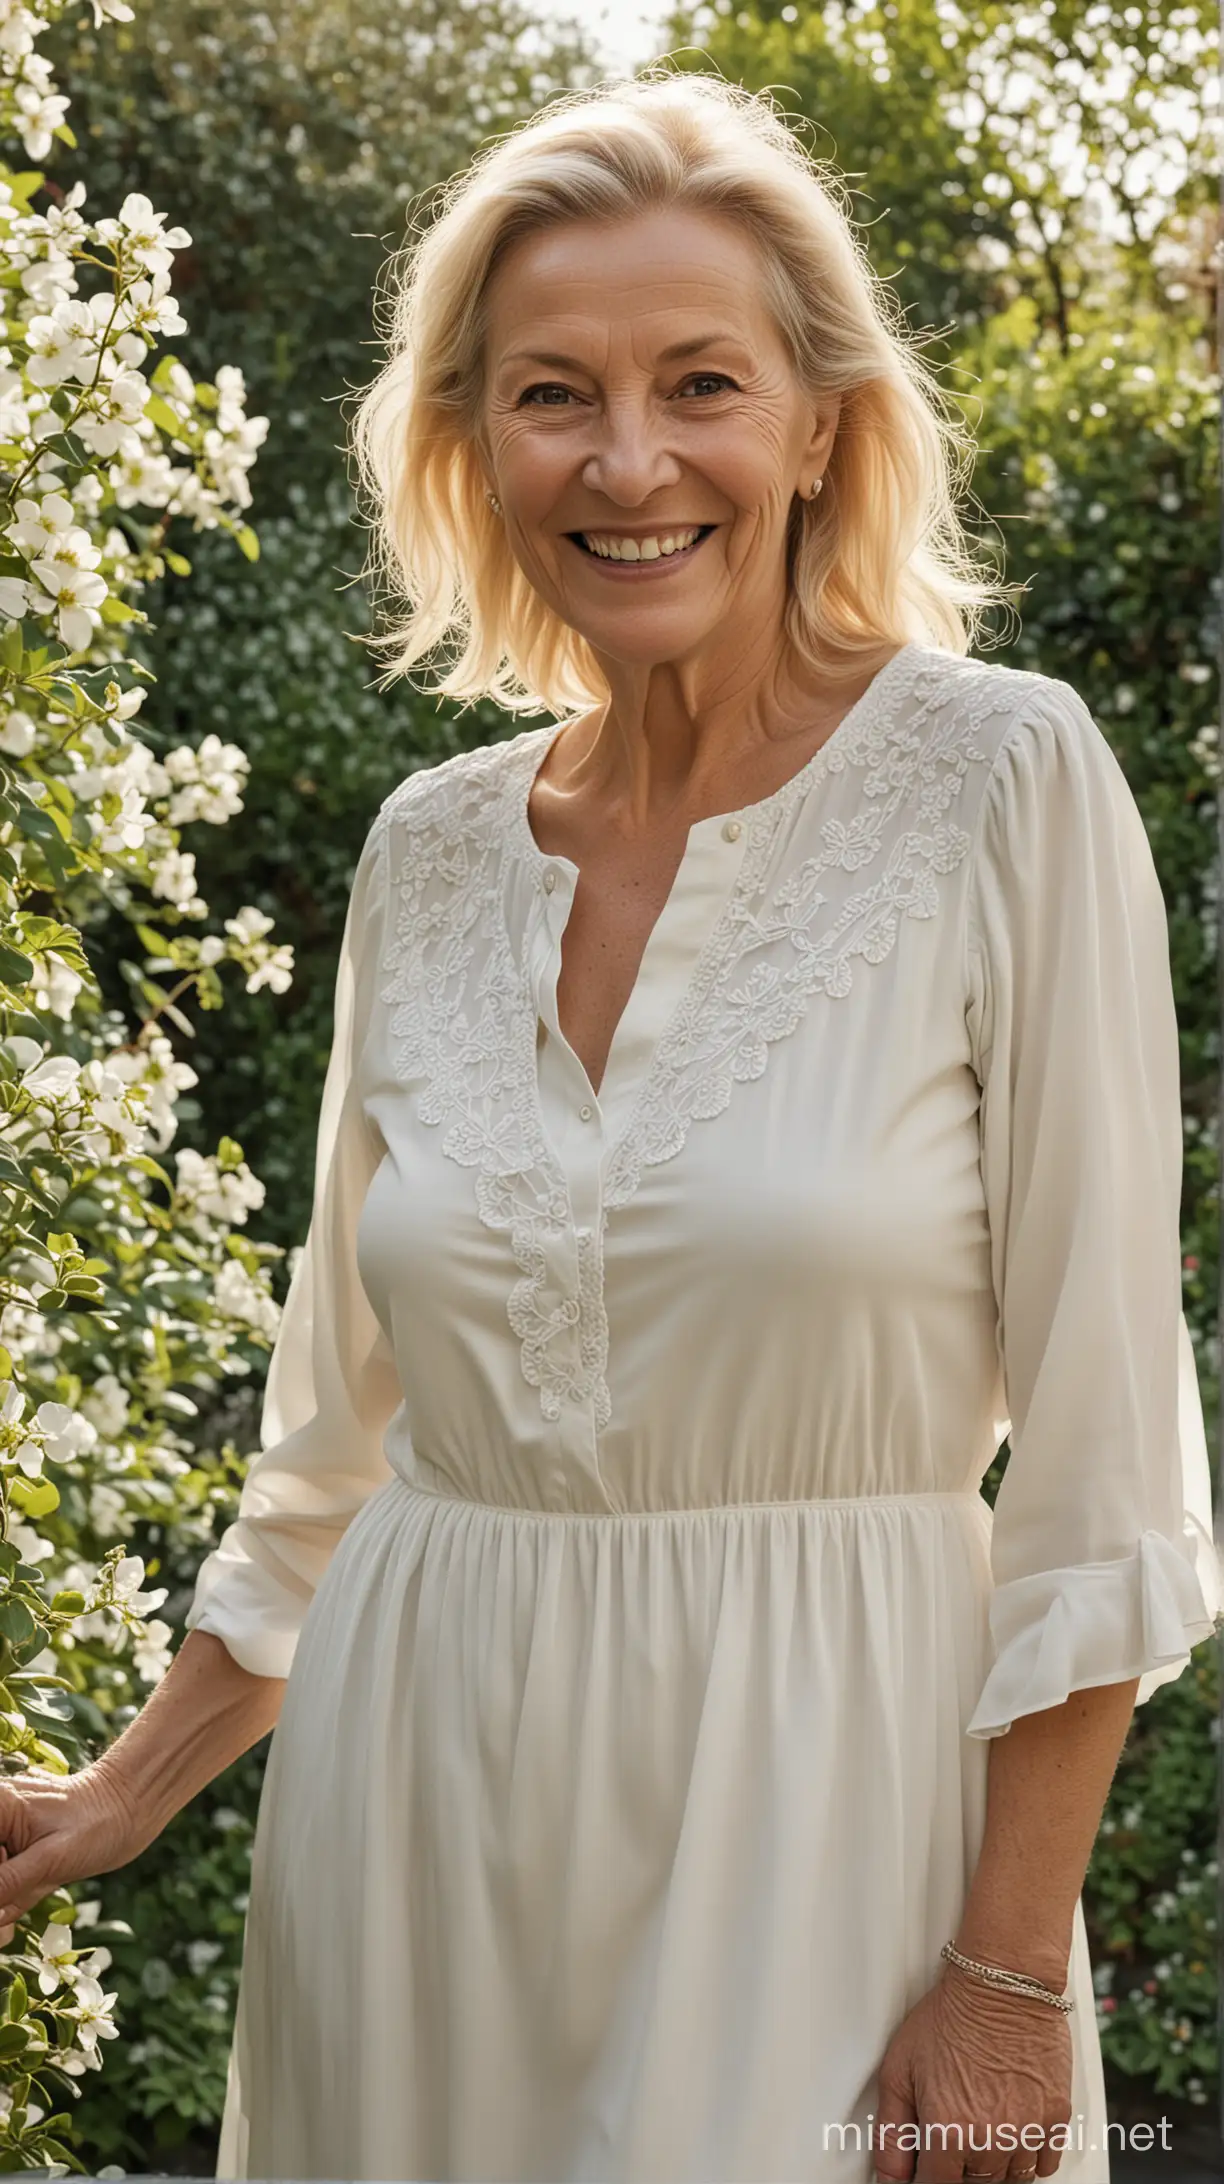 70 year old scandinavian woman portrait in a small garden.
Smiling wearing a white dress